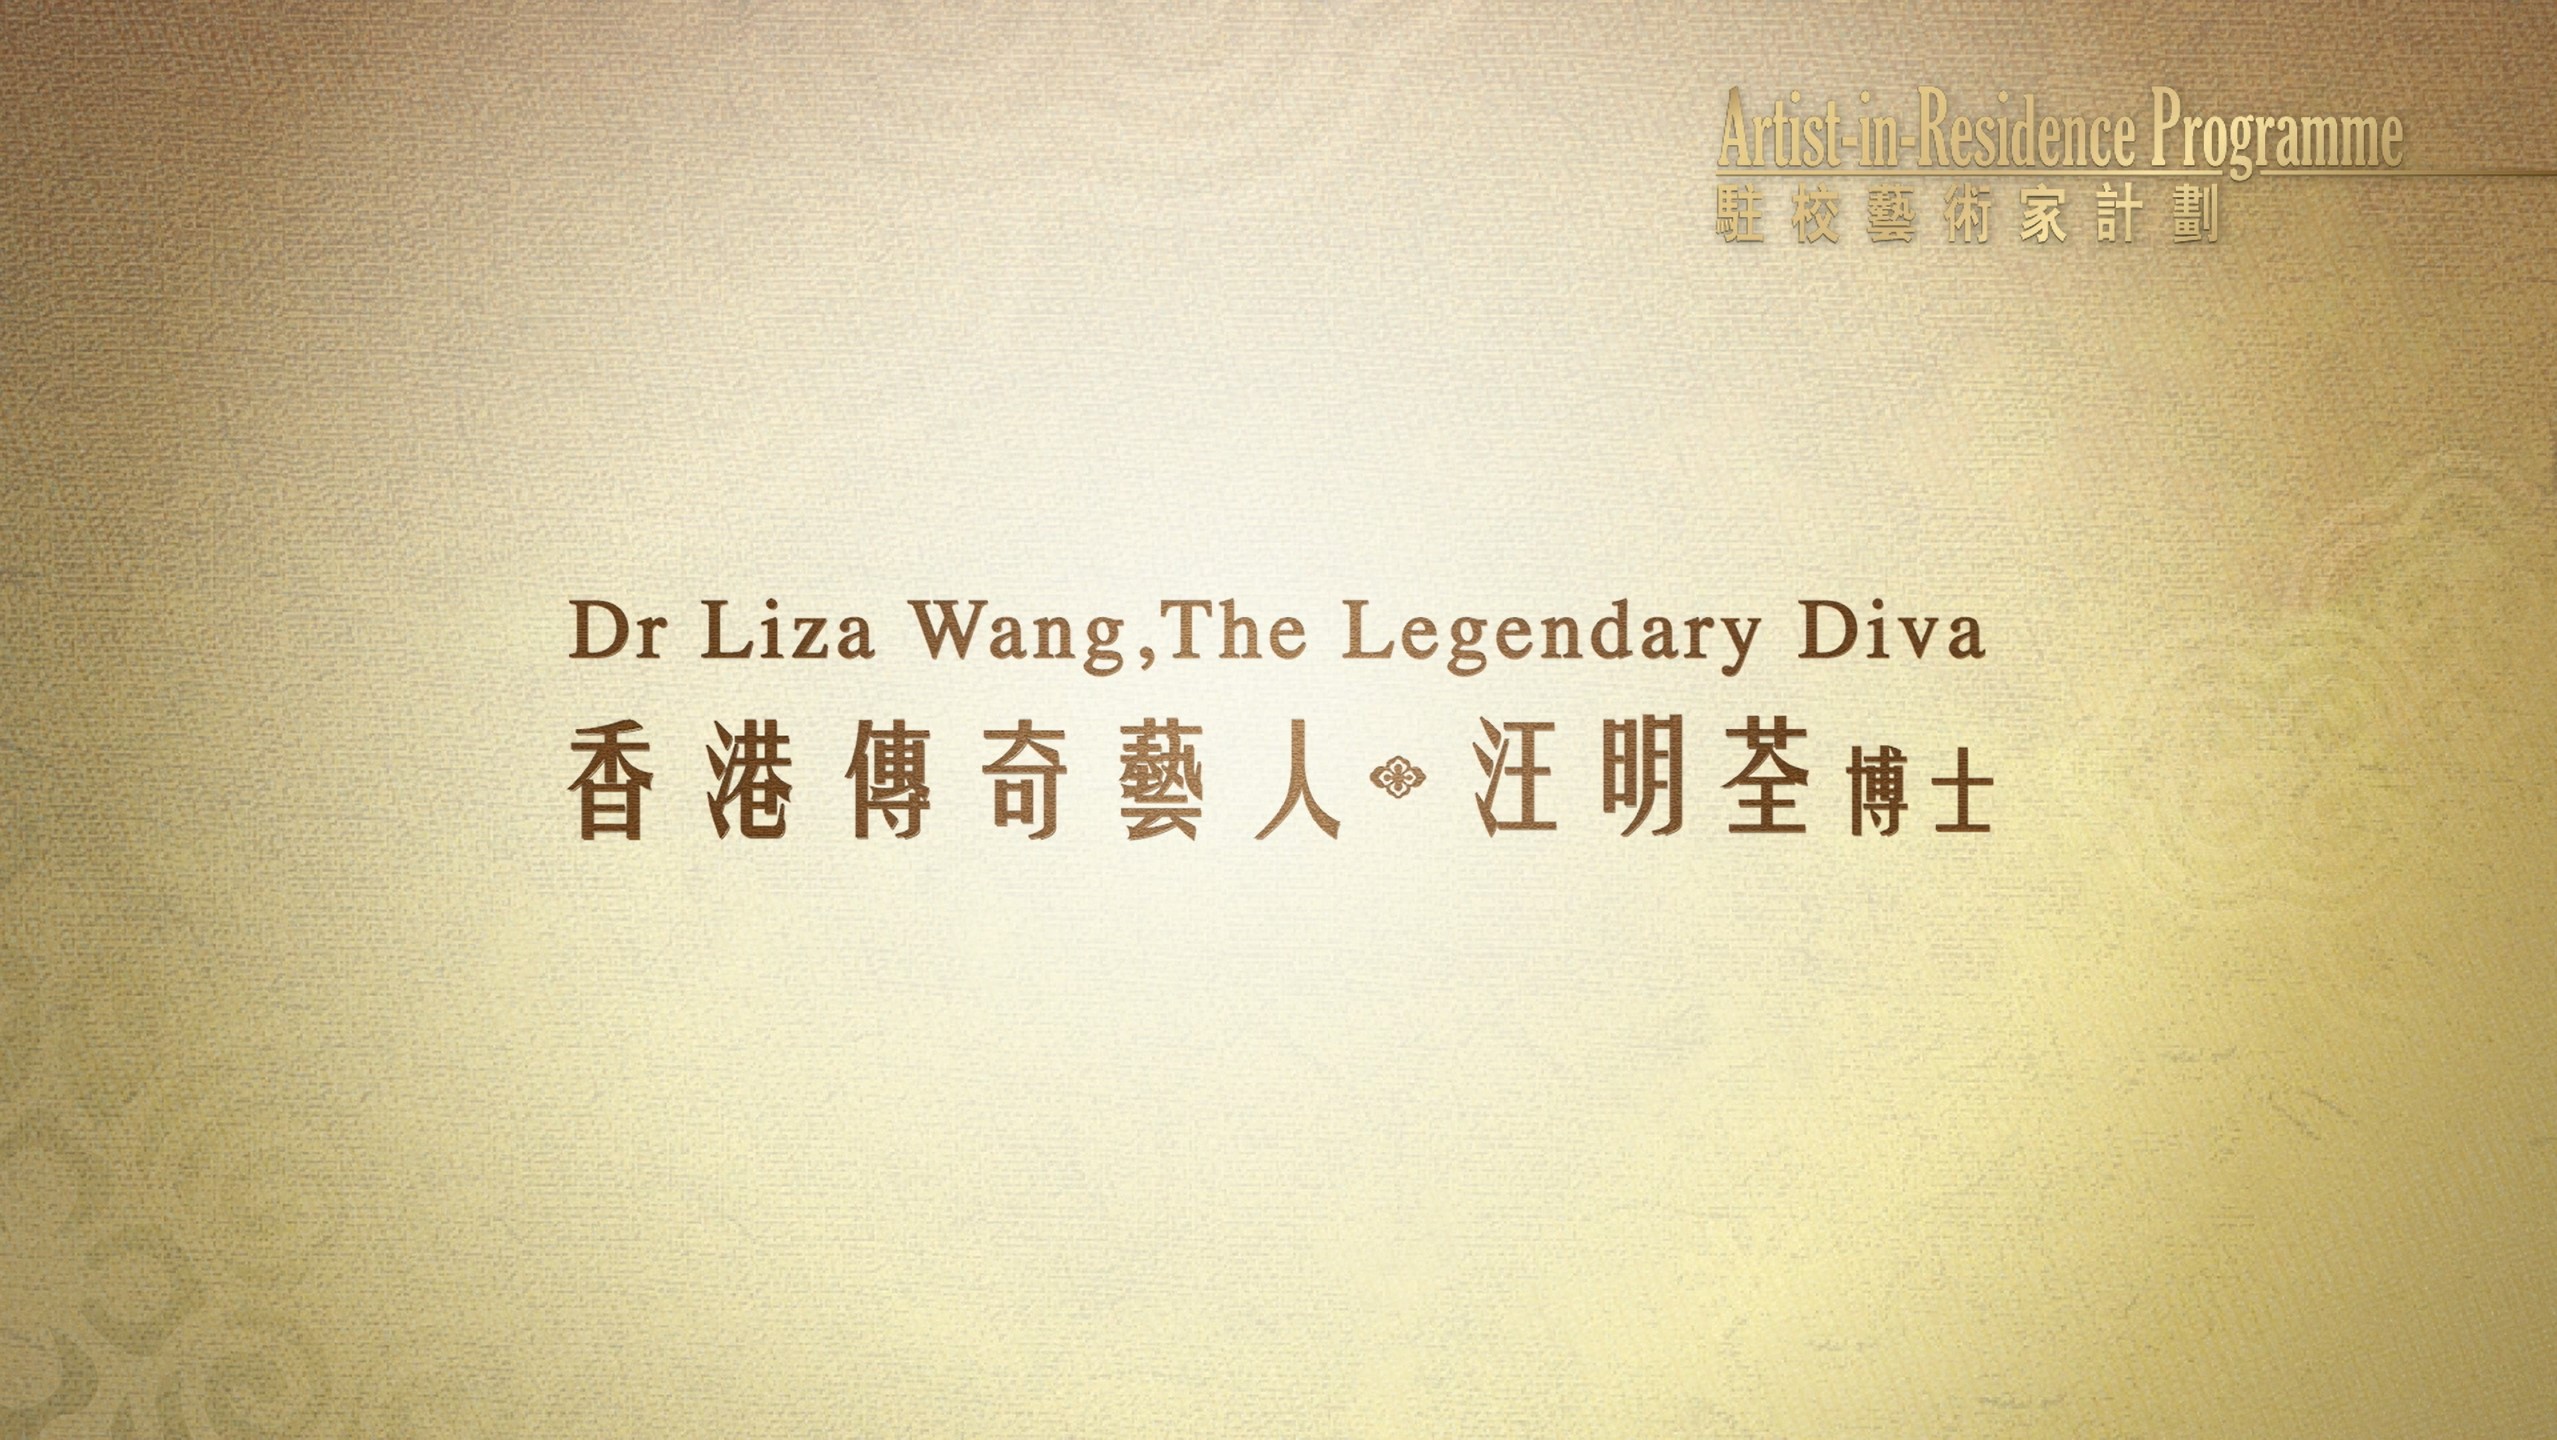 Dr Liza Wang (Episode 1): A Lifelong Love of Cantonese Opera